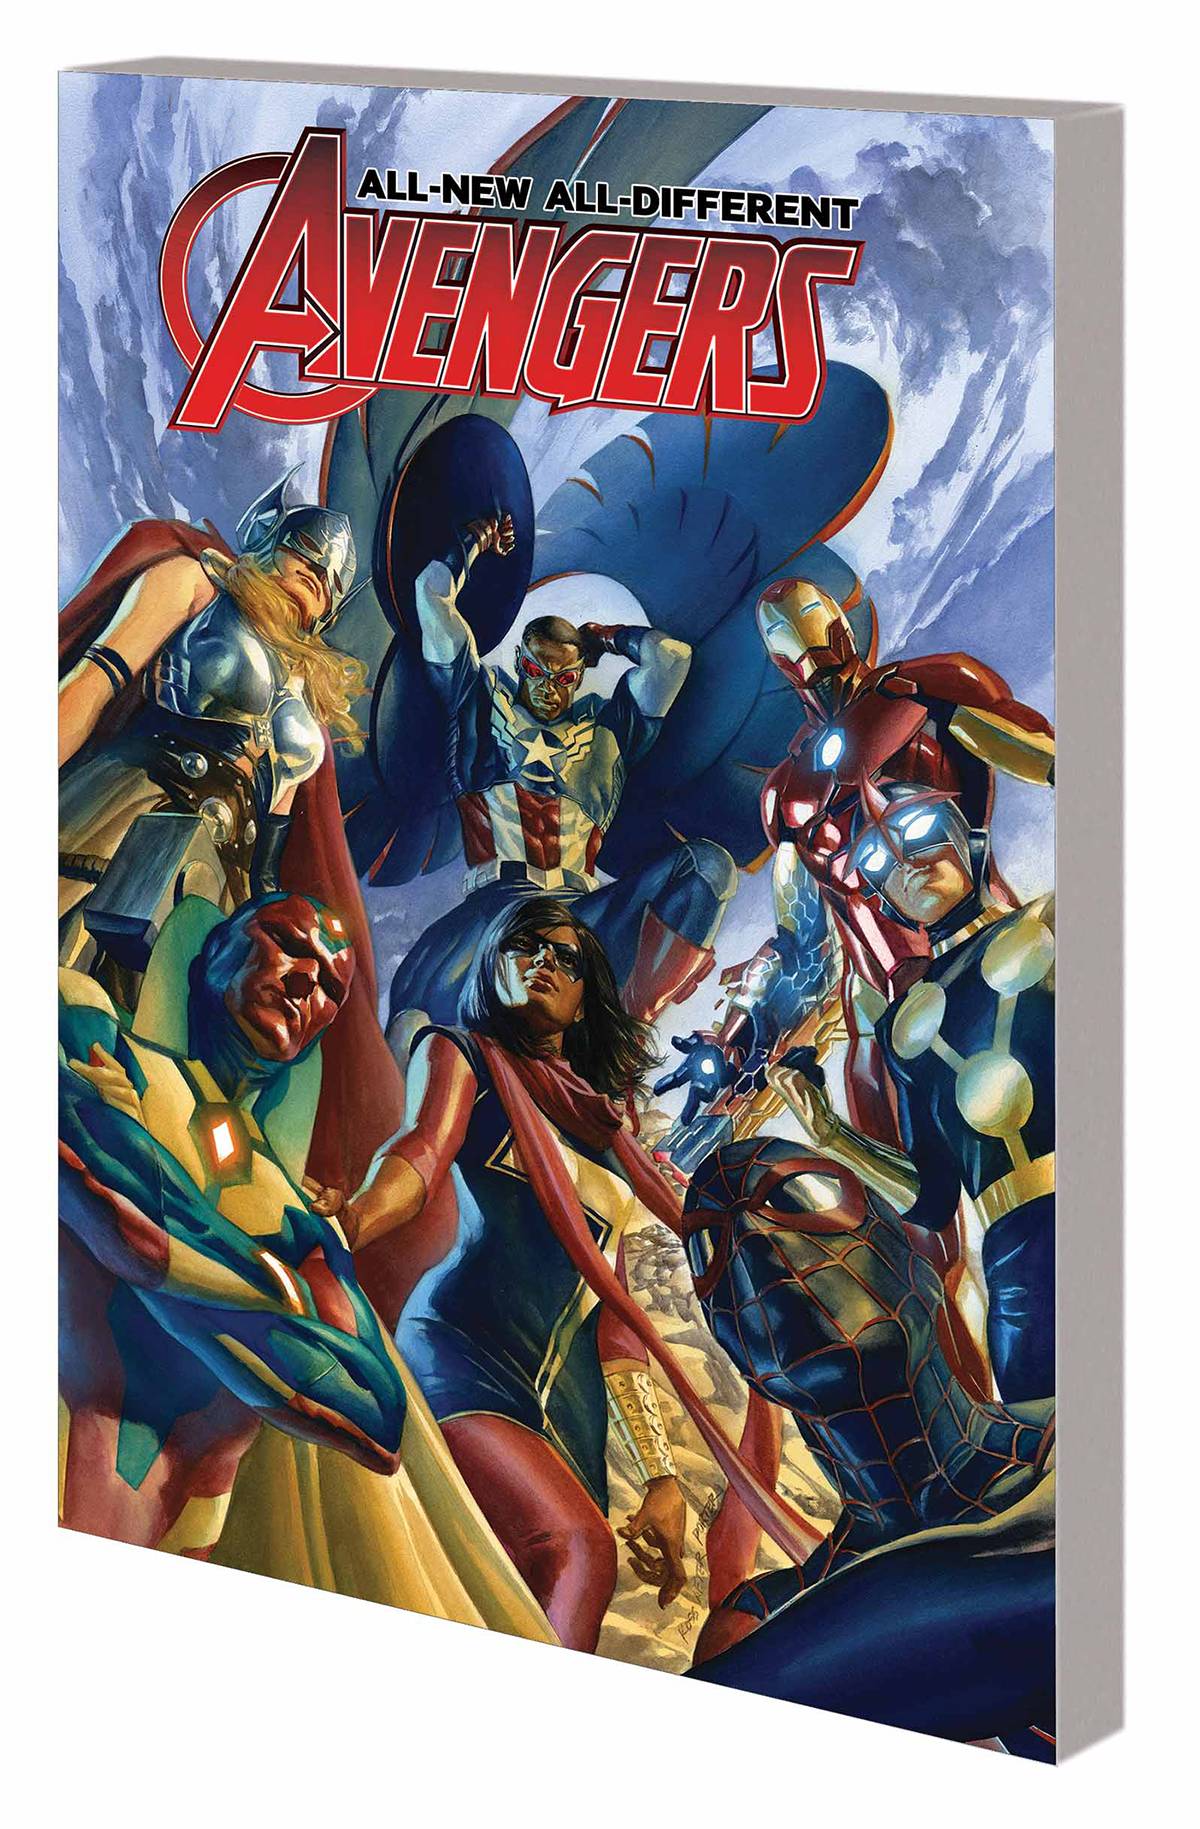 All New All Different Avengers Graphic Novel Volume 1